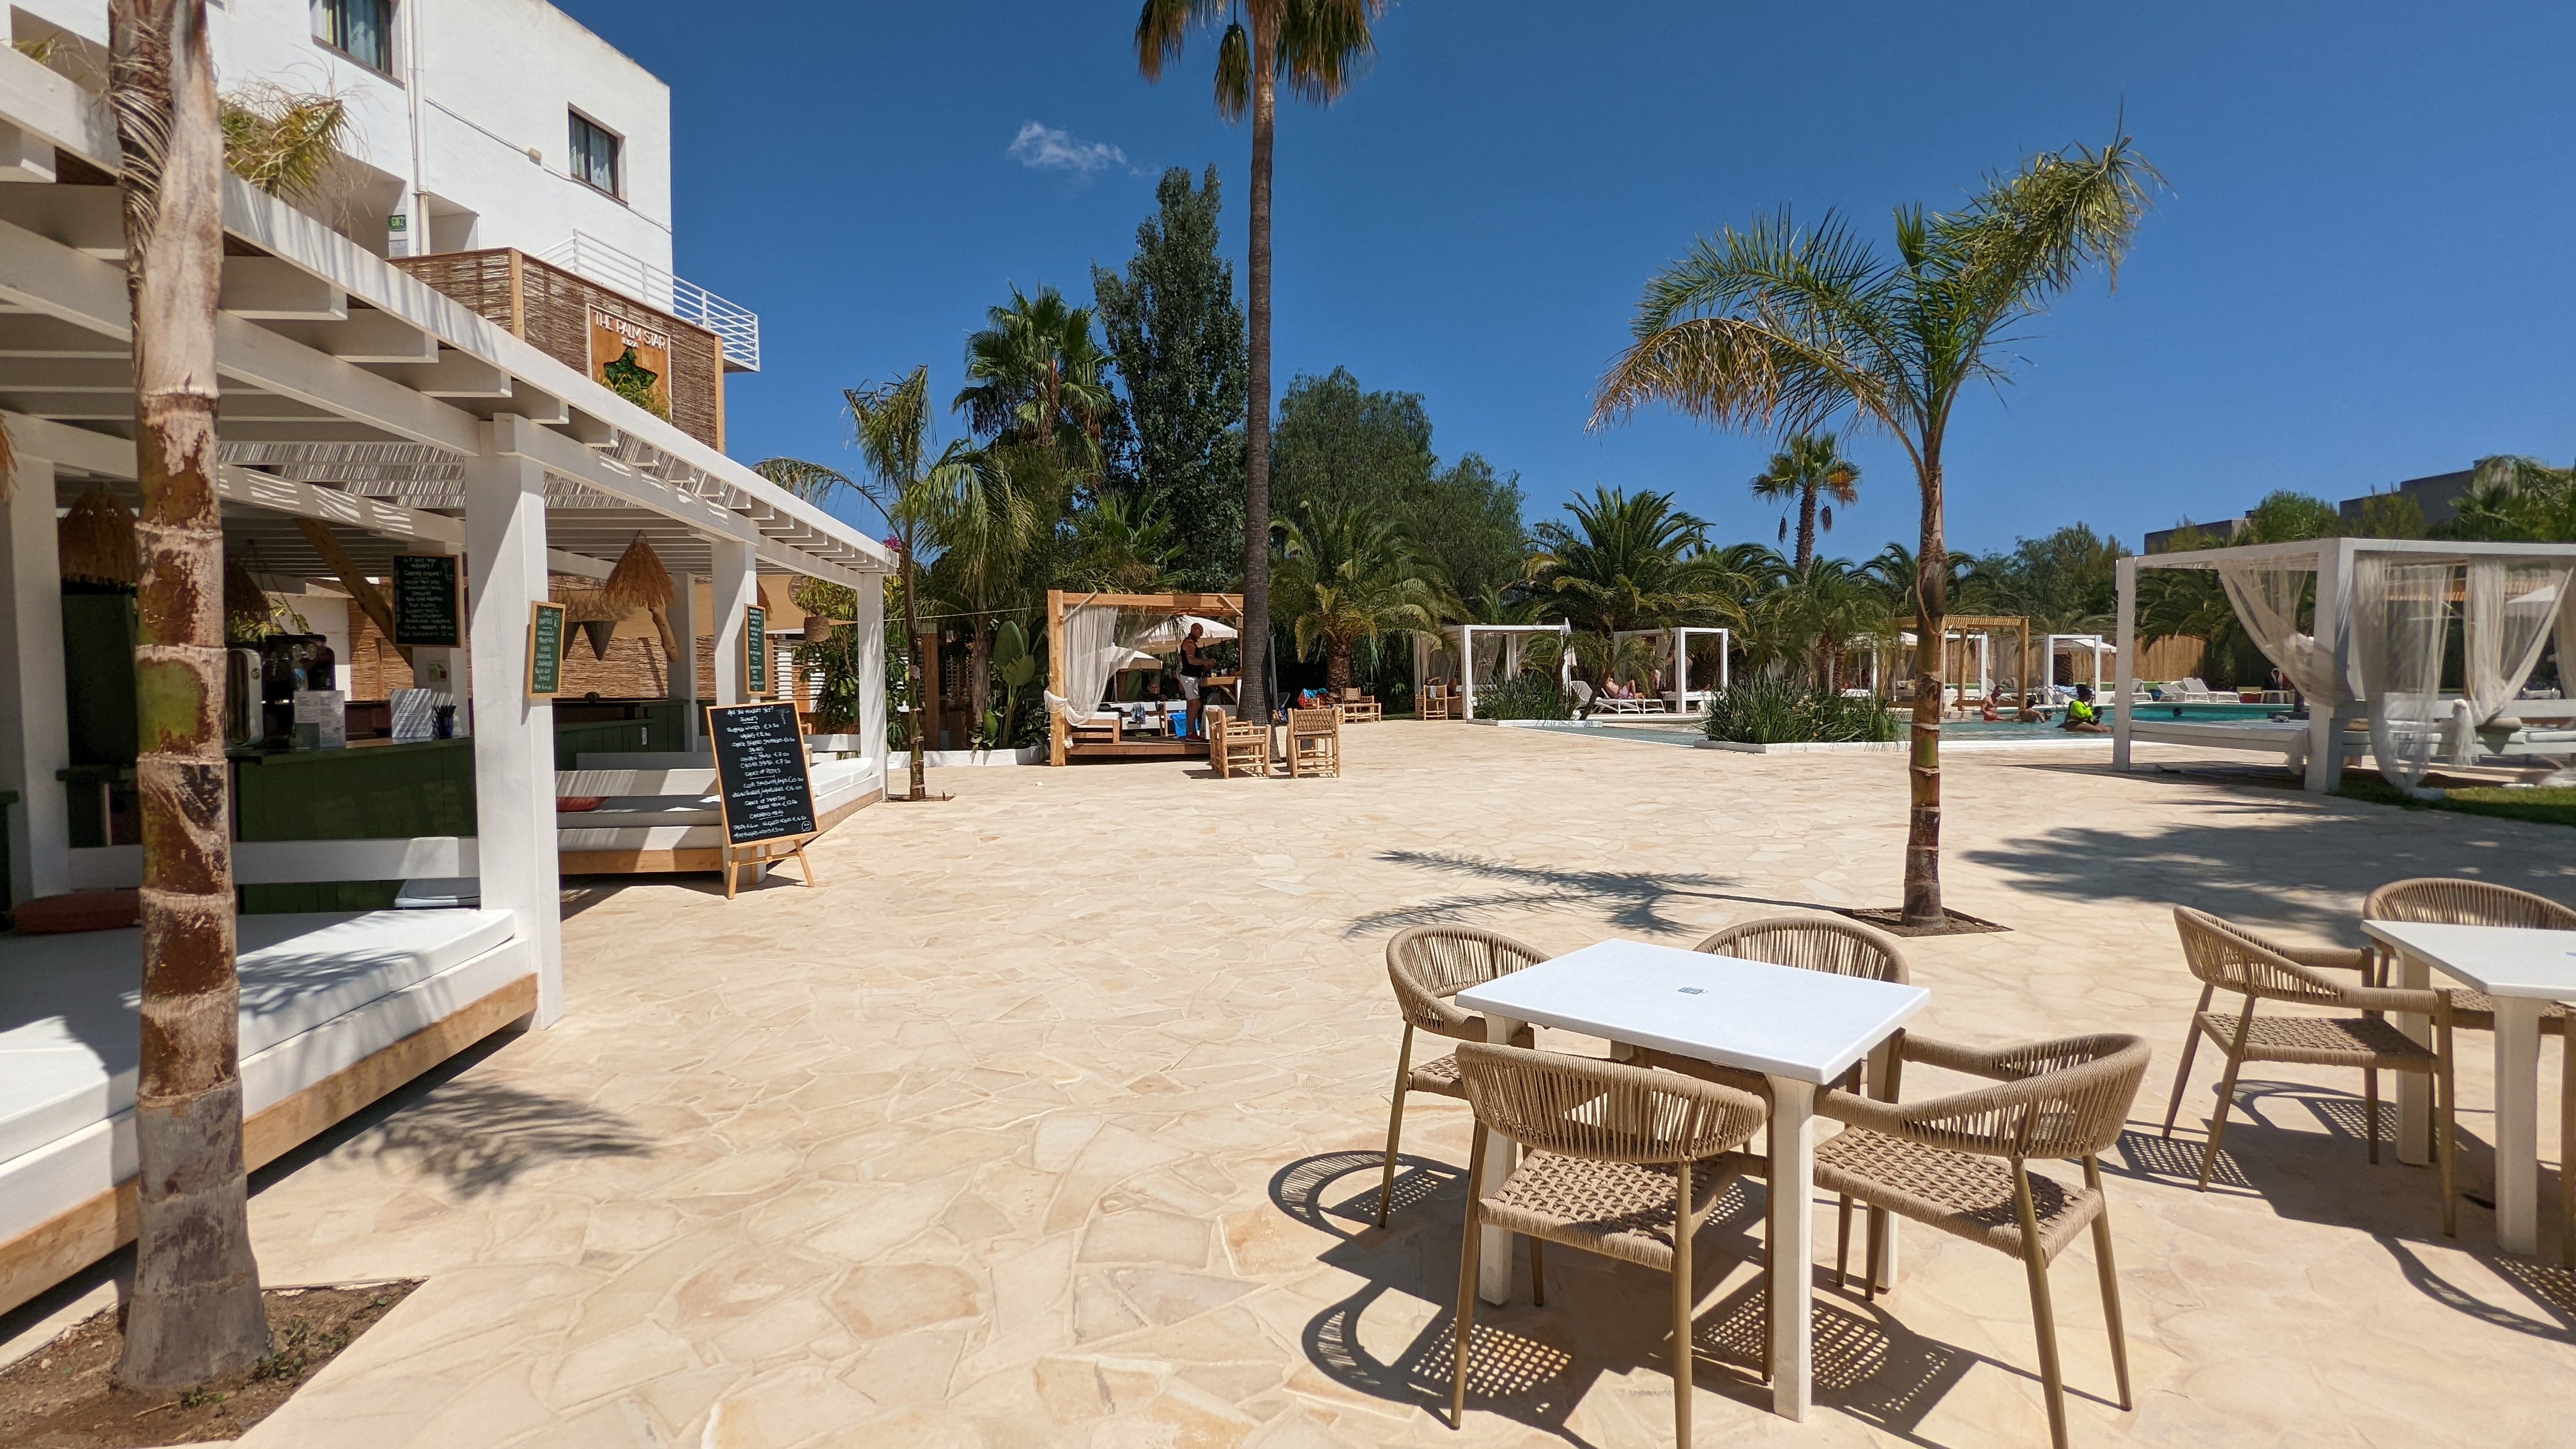 Galeria de imagenes The Palm Star Ibiza